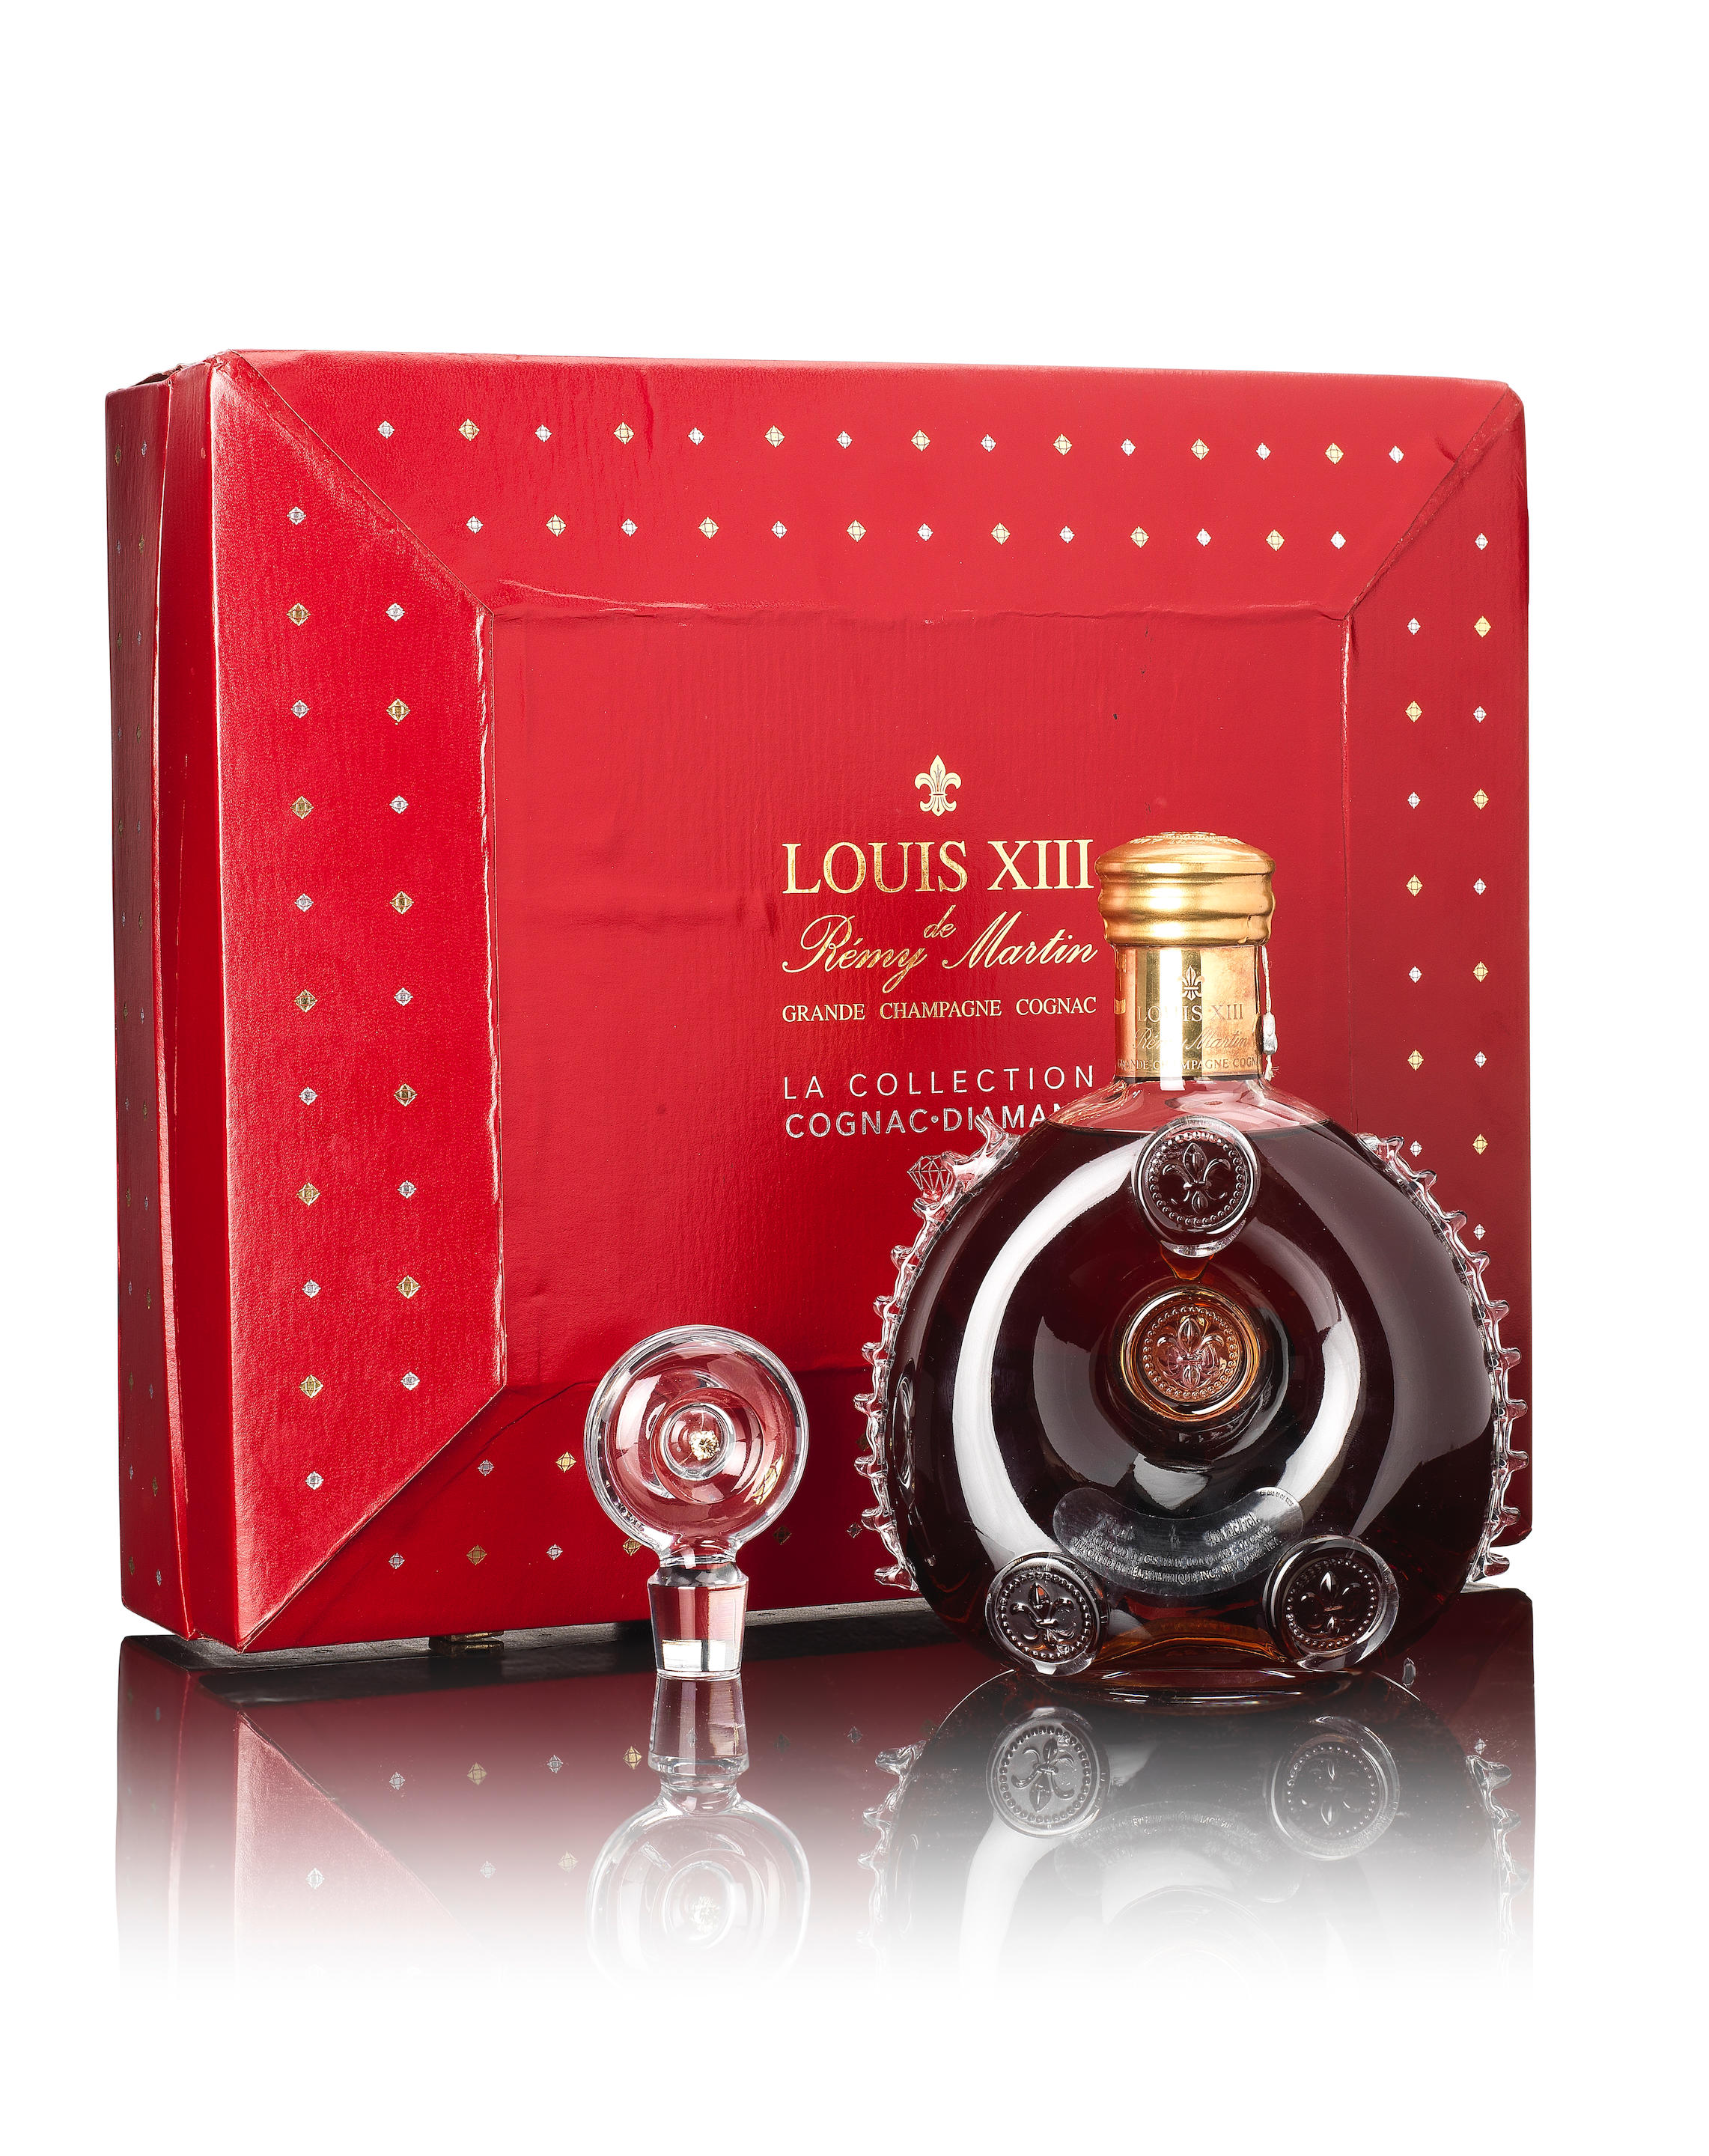 Louis XIII de Remy Martin 'Diamant' Grande Champagne Cognac